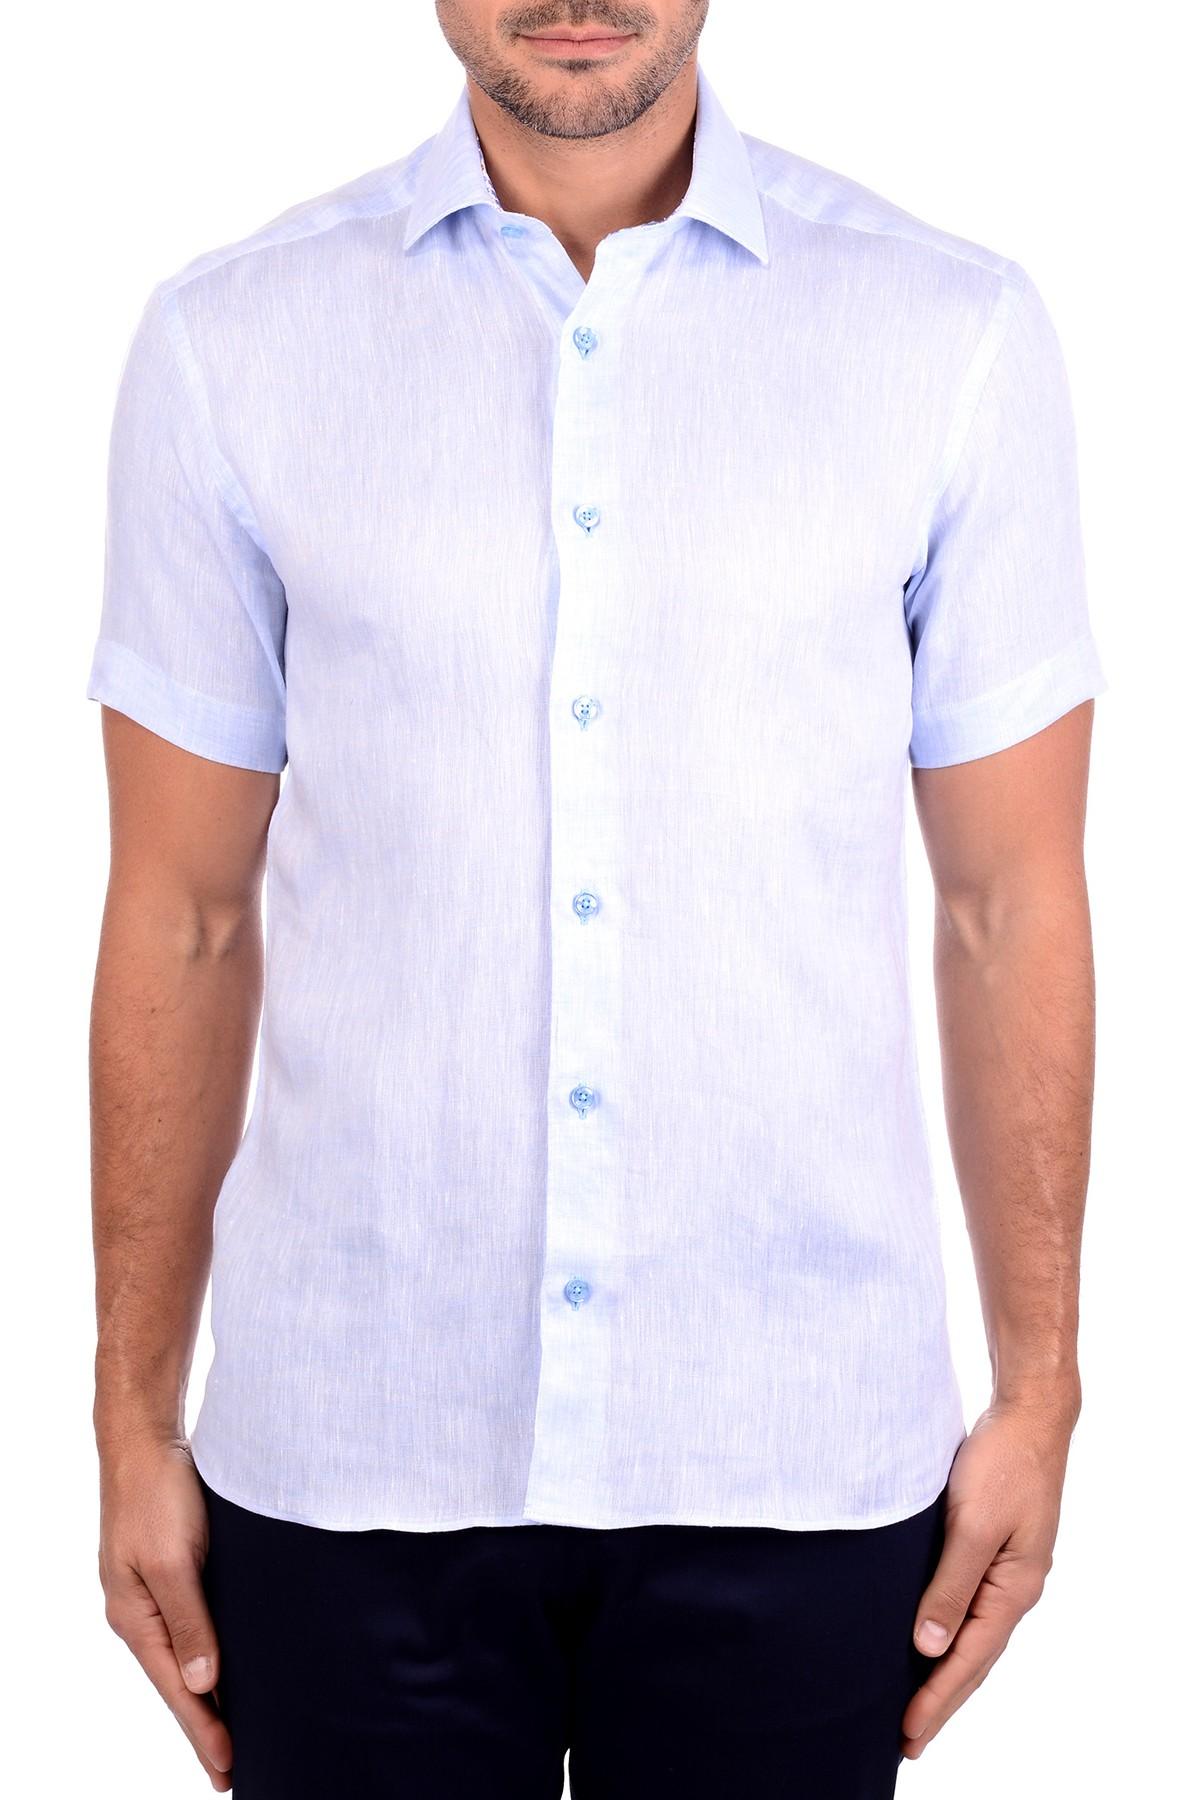 Bertigo Edoardo Solid Modern Fit Linen Shirt for Men - Lyst